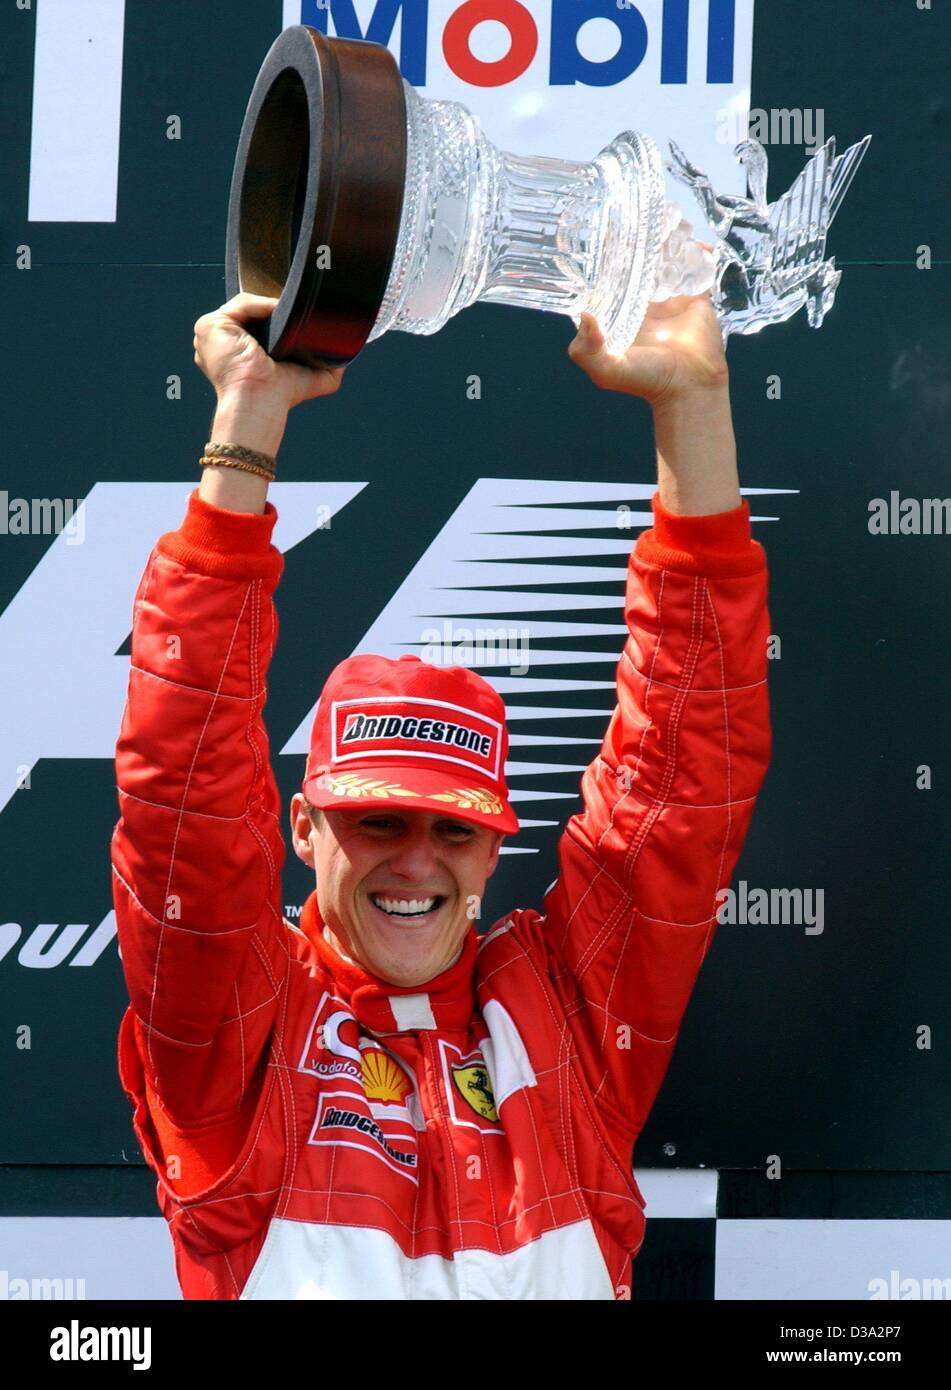 dpa) - German formula 1 pilot Michael Schumacher jubilates with